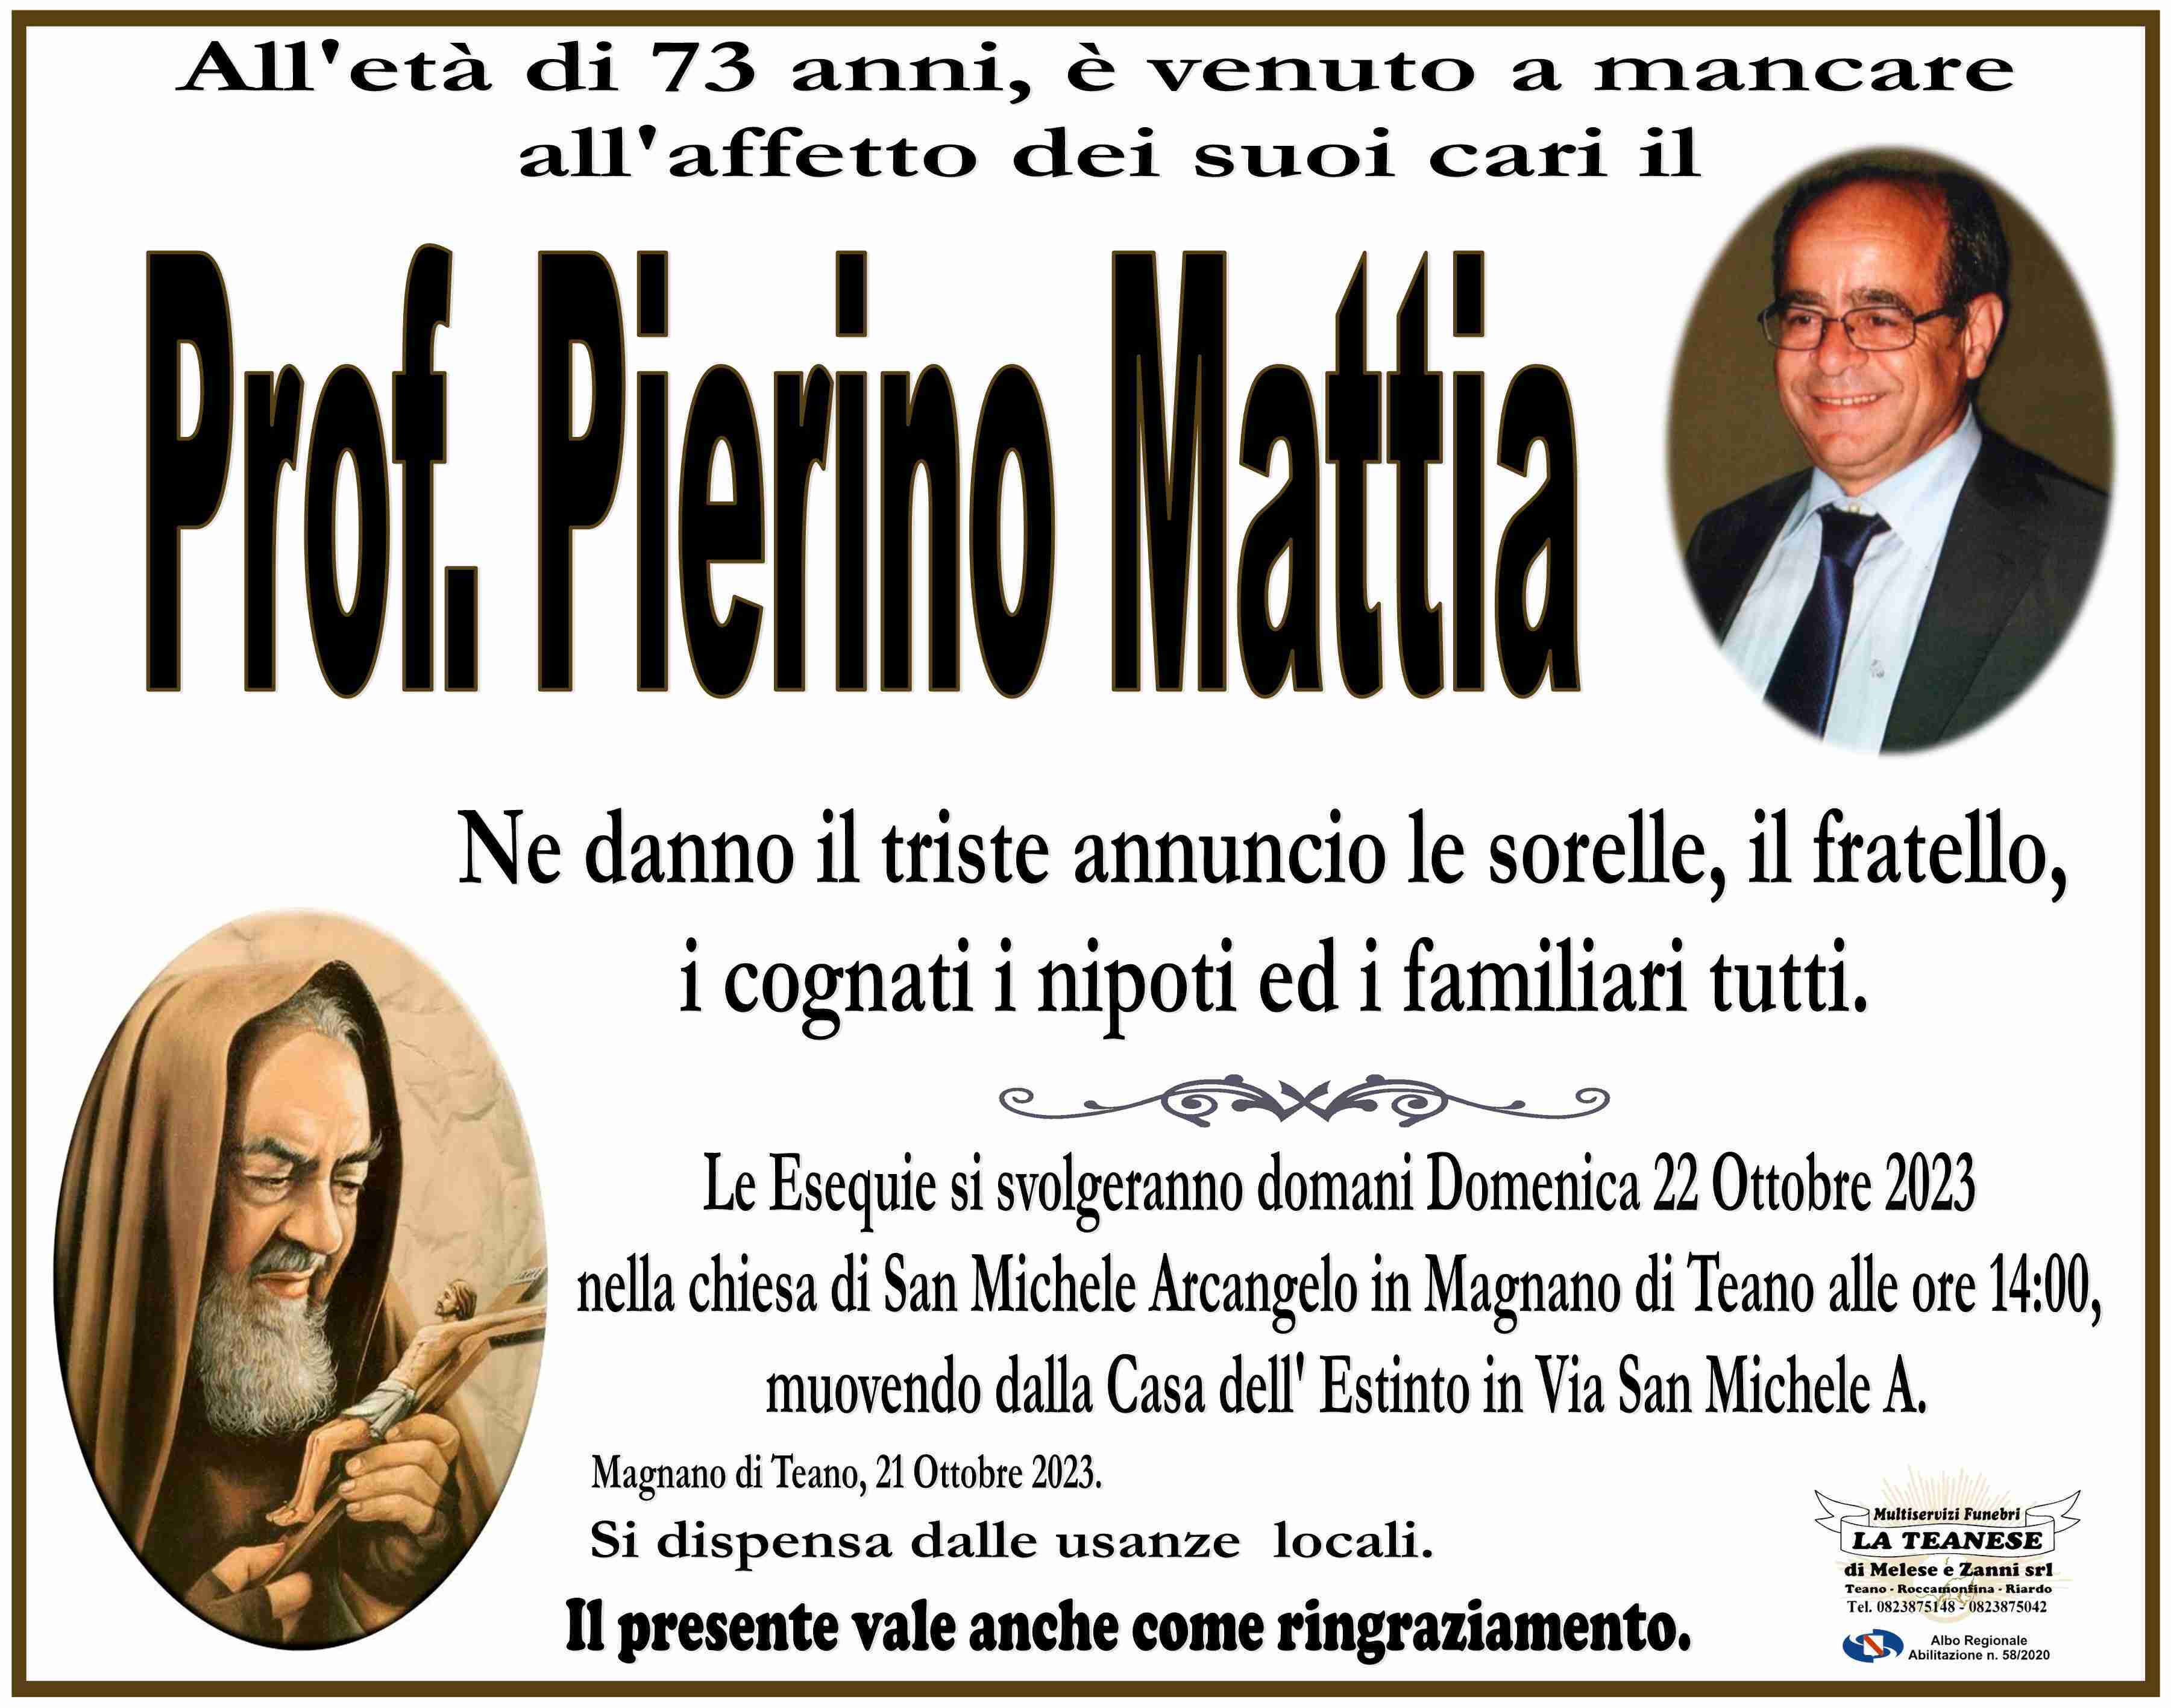 Prof. Pierino Mattia